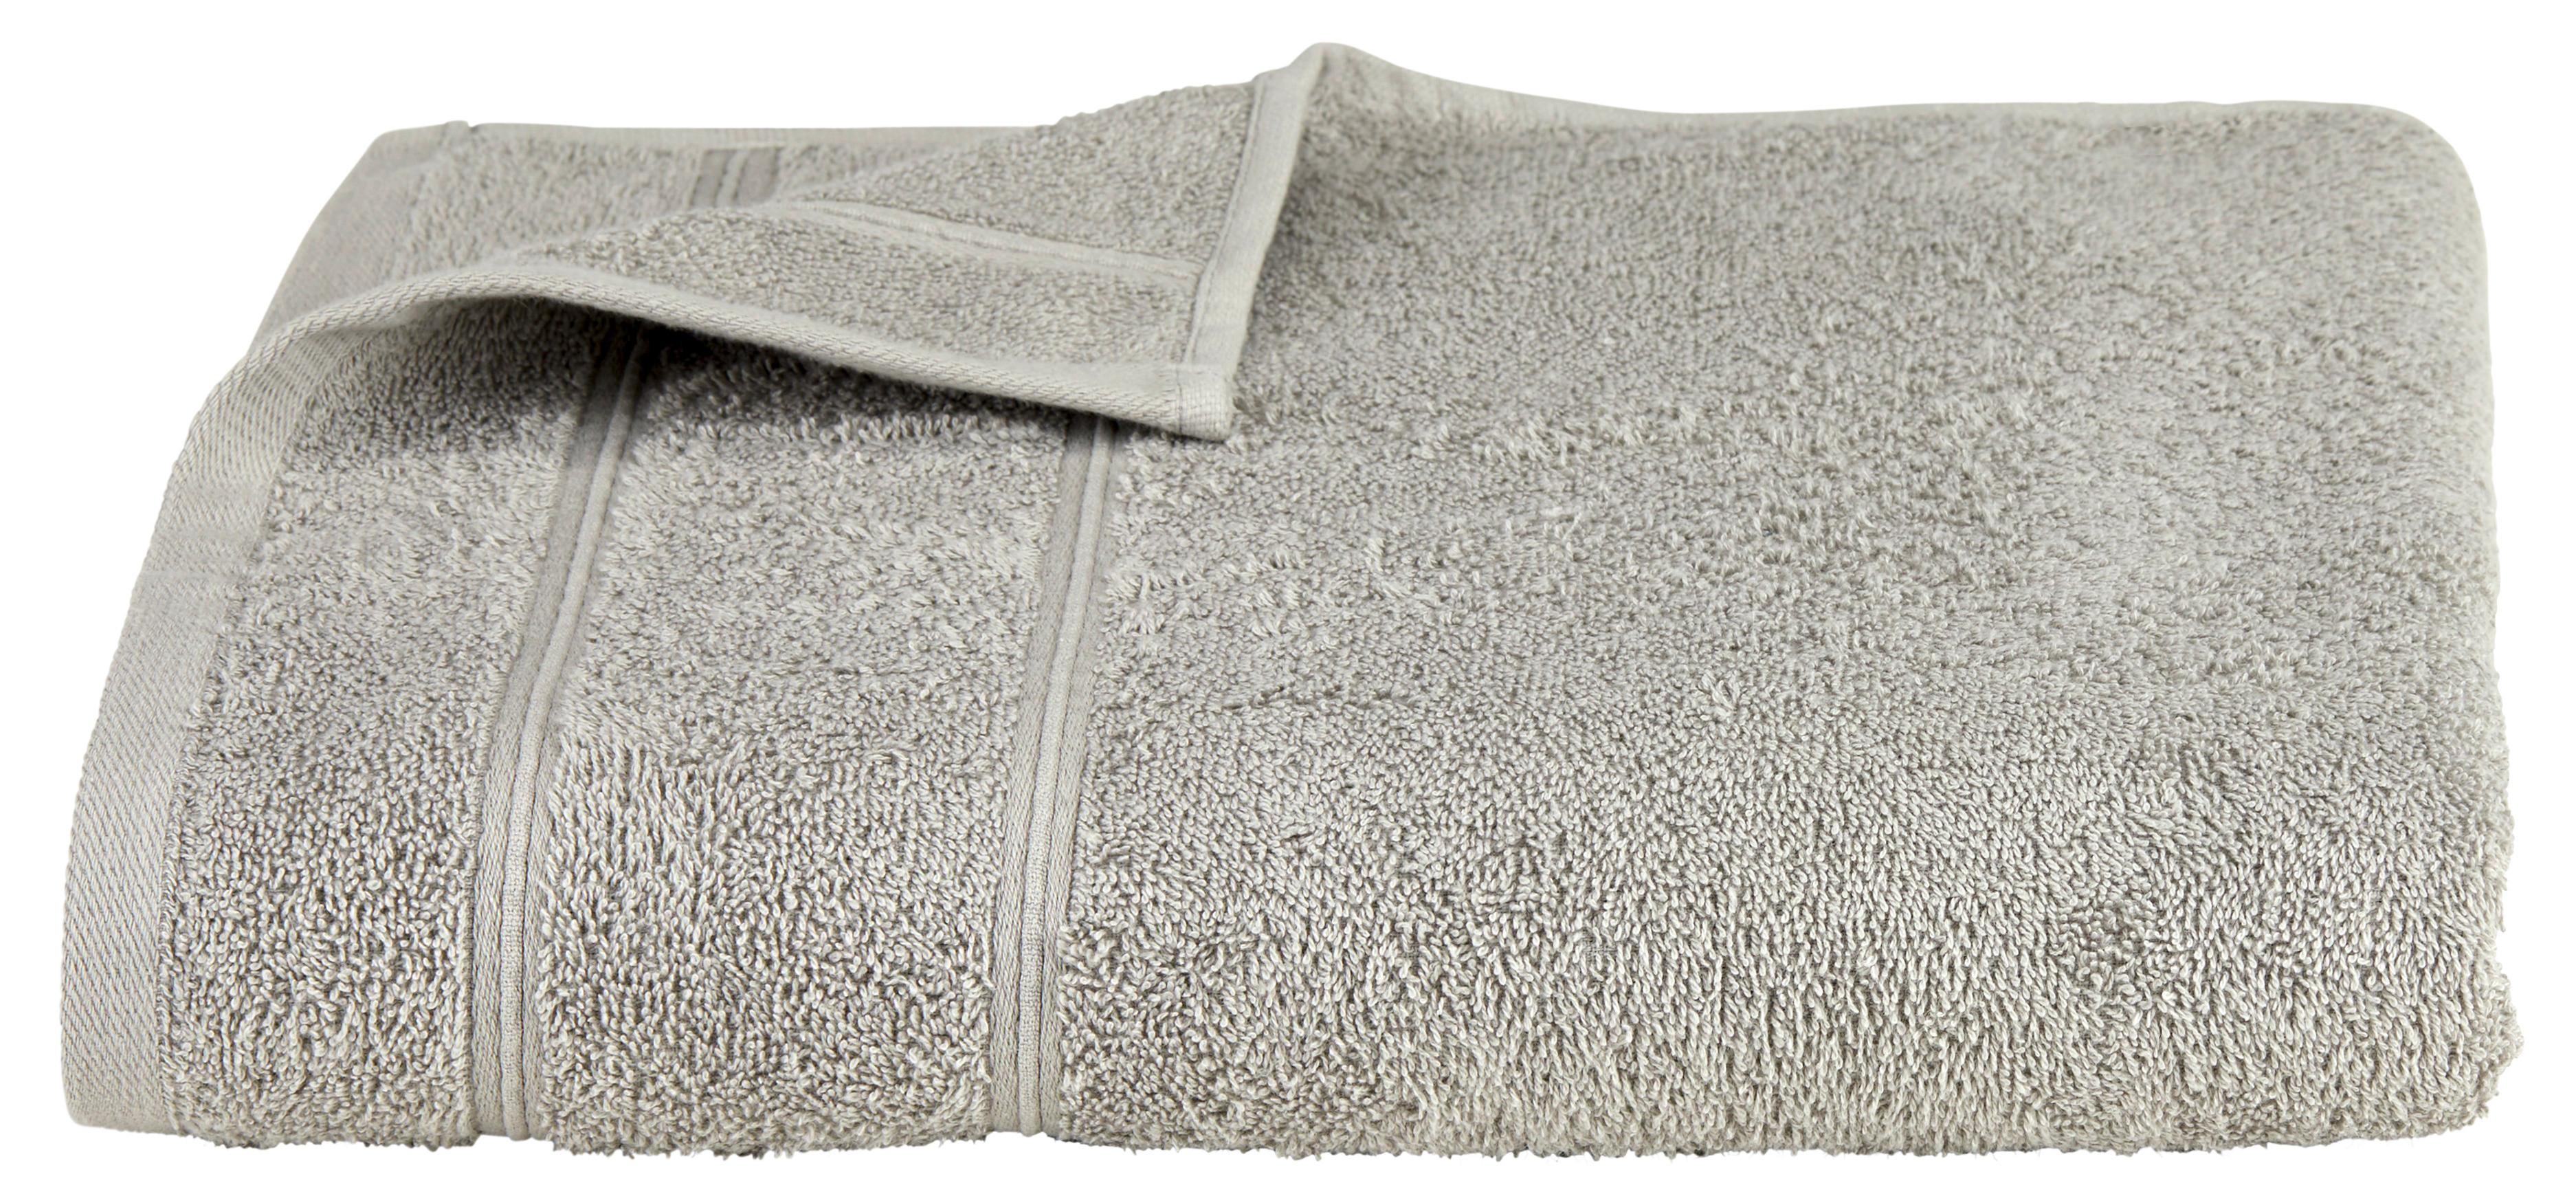 Brisača Melanie - svetlo siva, tekstil (70/140cm) - Modern Living